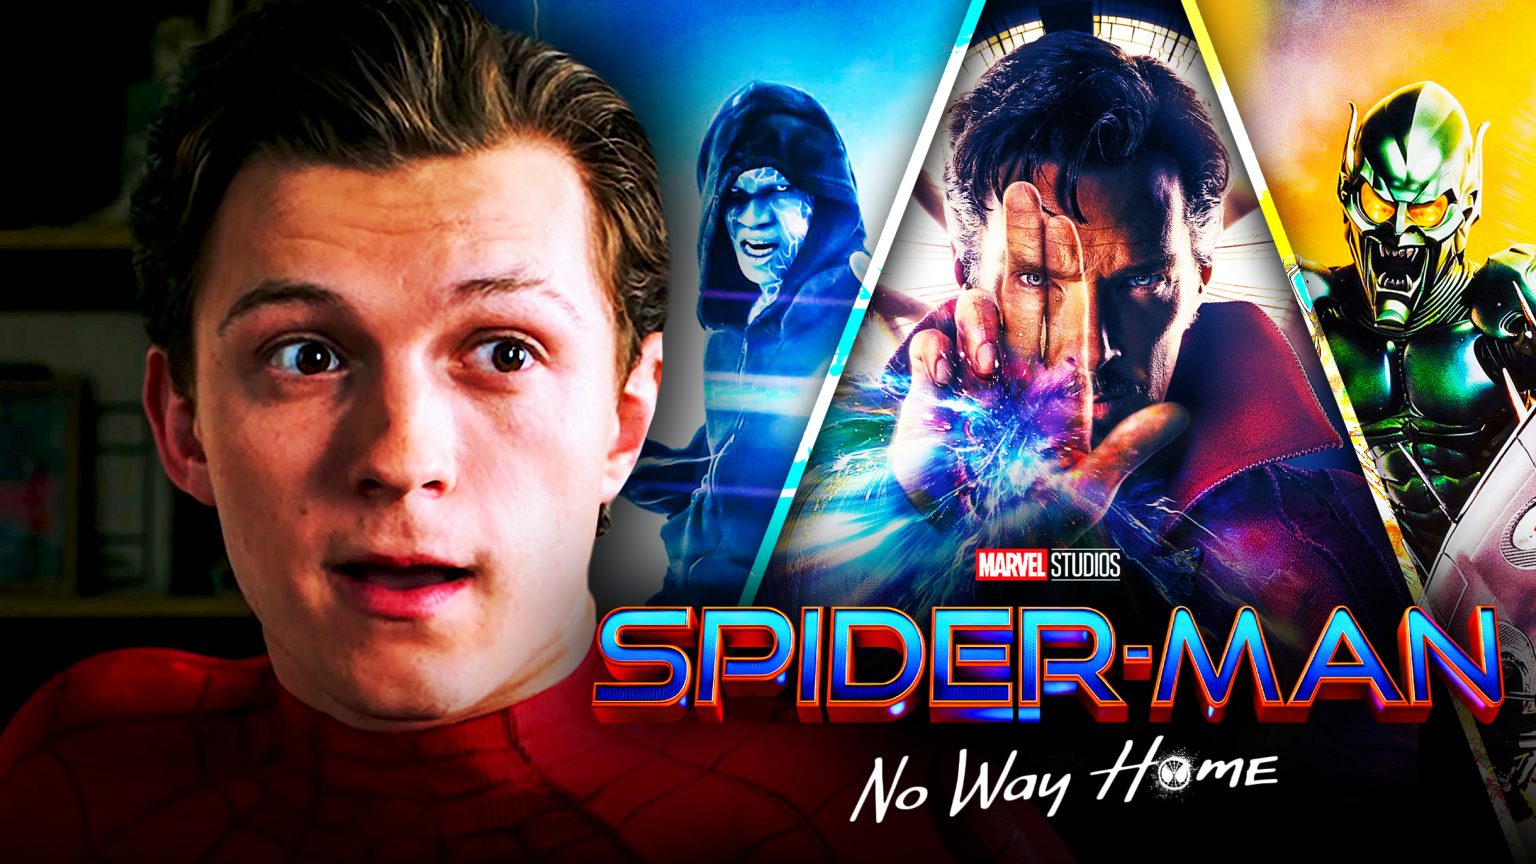 Spiderman Trailer Leak Mystery Spider Man Trailer Has Fans In A Frenzy Fica O Aviso No